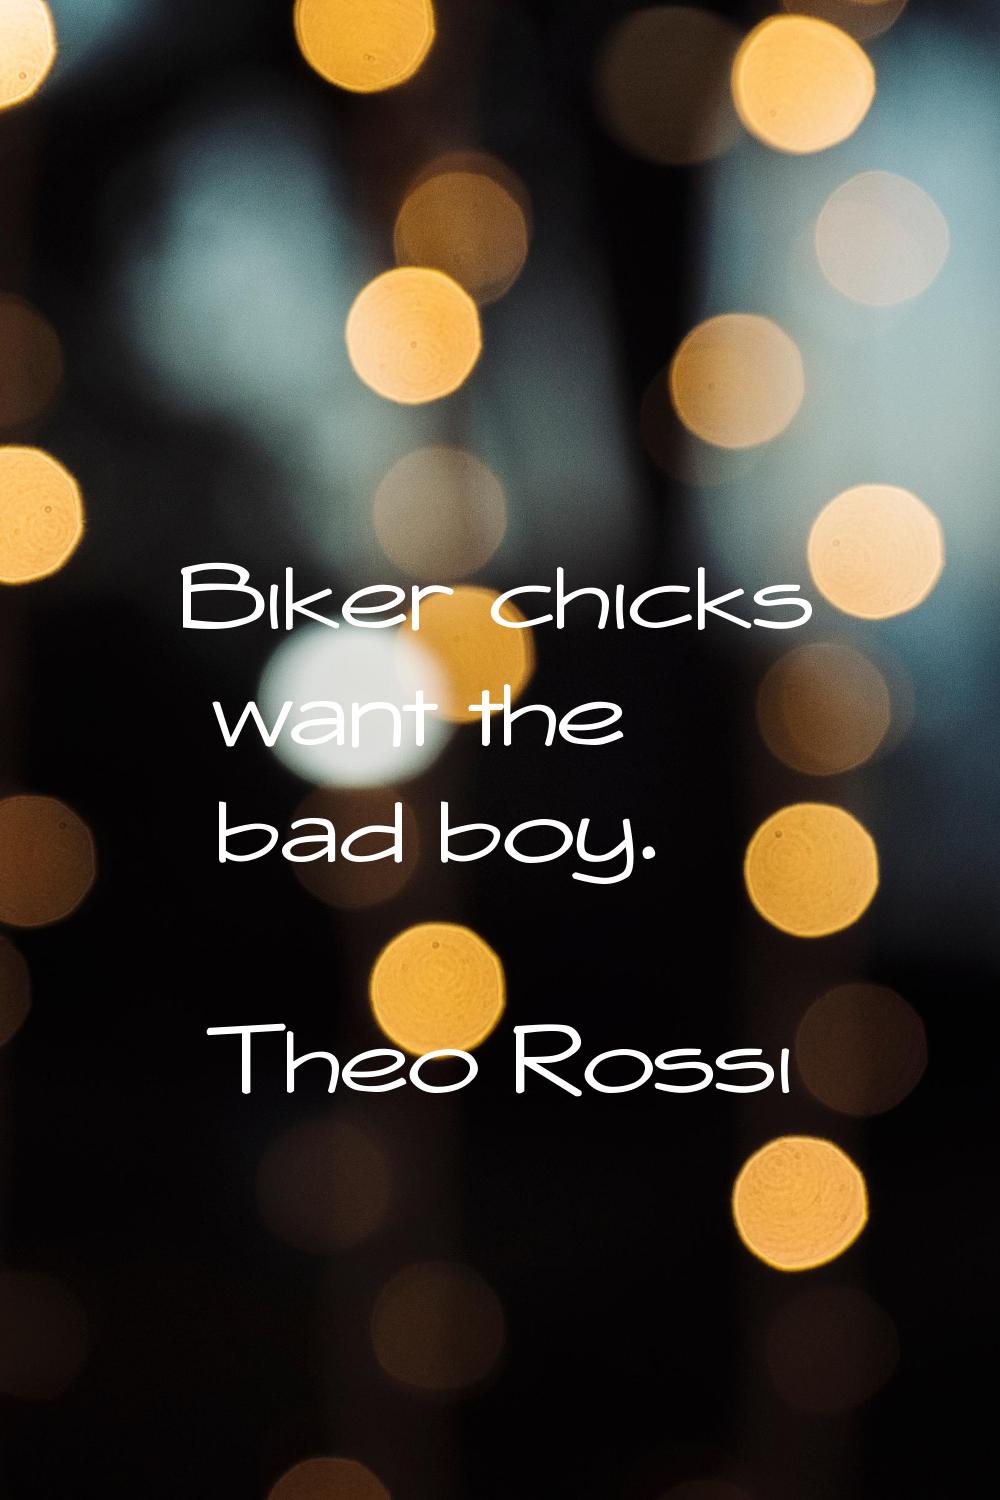 Biker chicks want the bad boy.